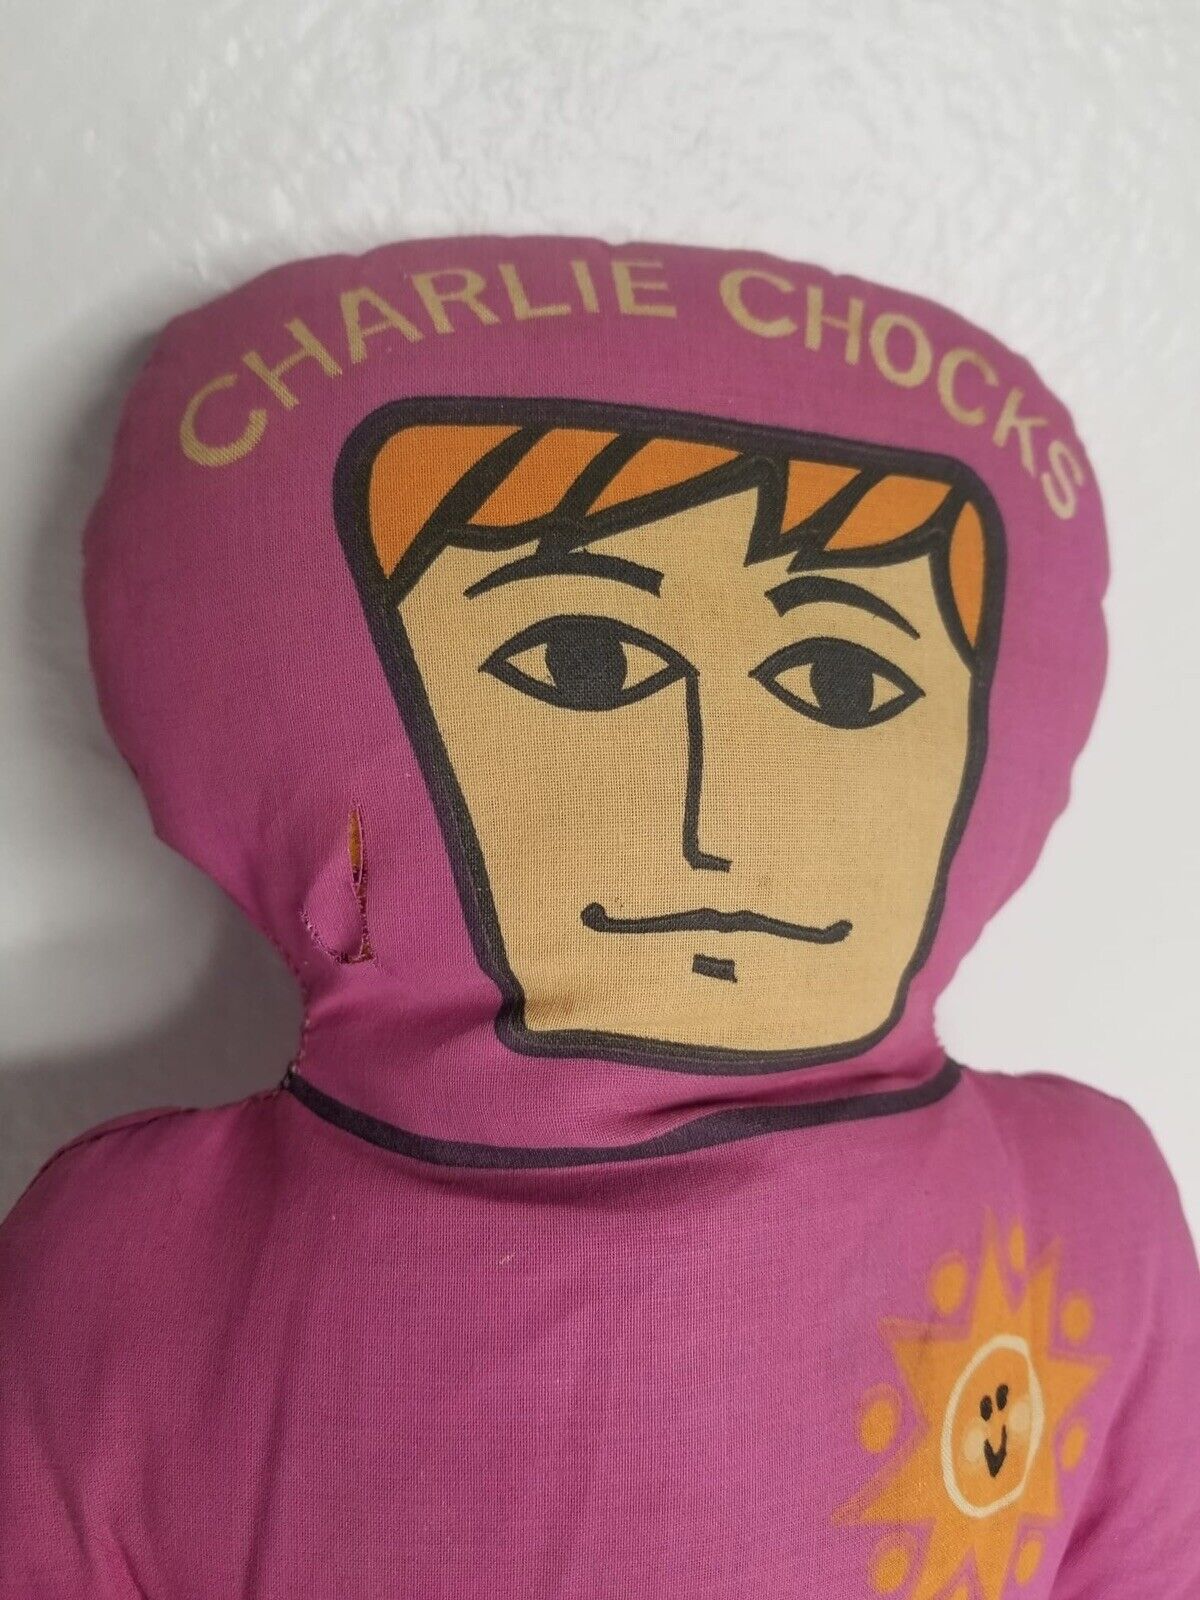 Vintage 1960s Plush Pillow Dolls Set - Charlie Chocks, Tony the Tiger, and Burger King - TreasuTiques